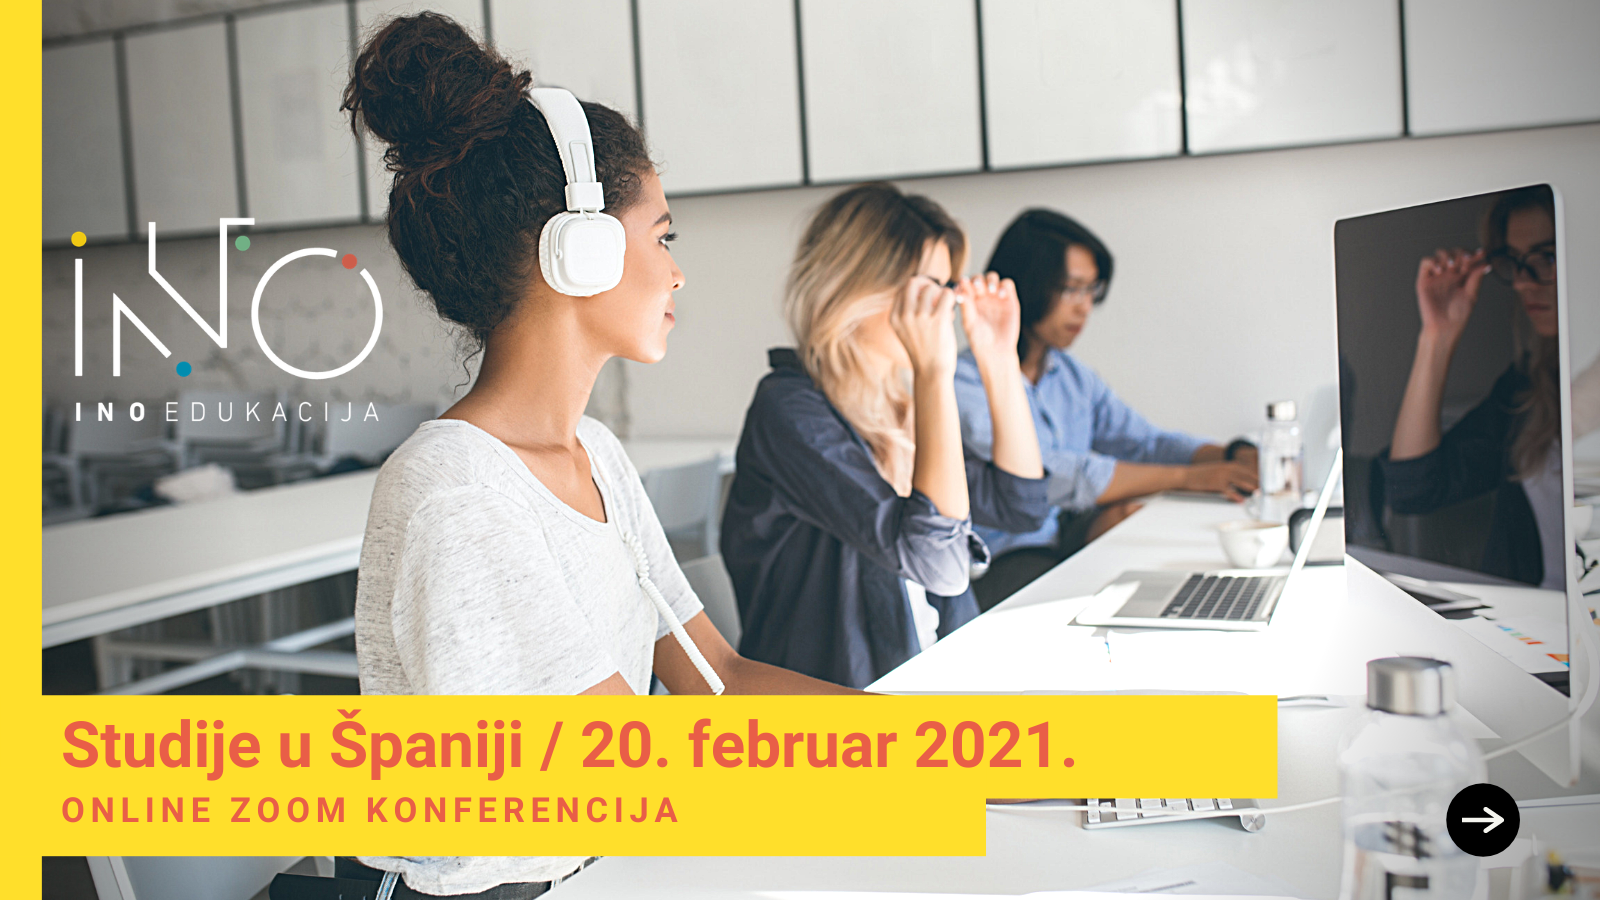 Studije u Španiji / online konferencija 20. februar 2021